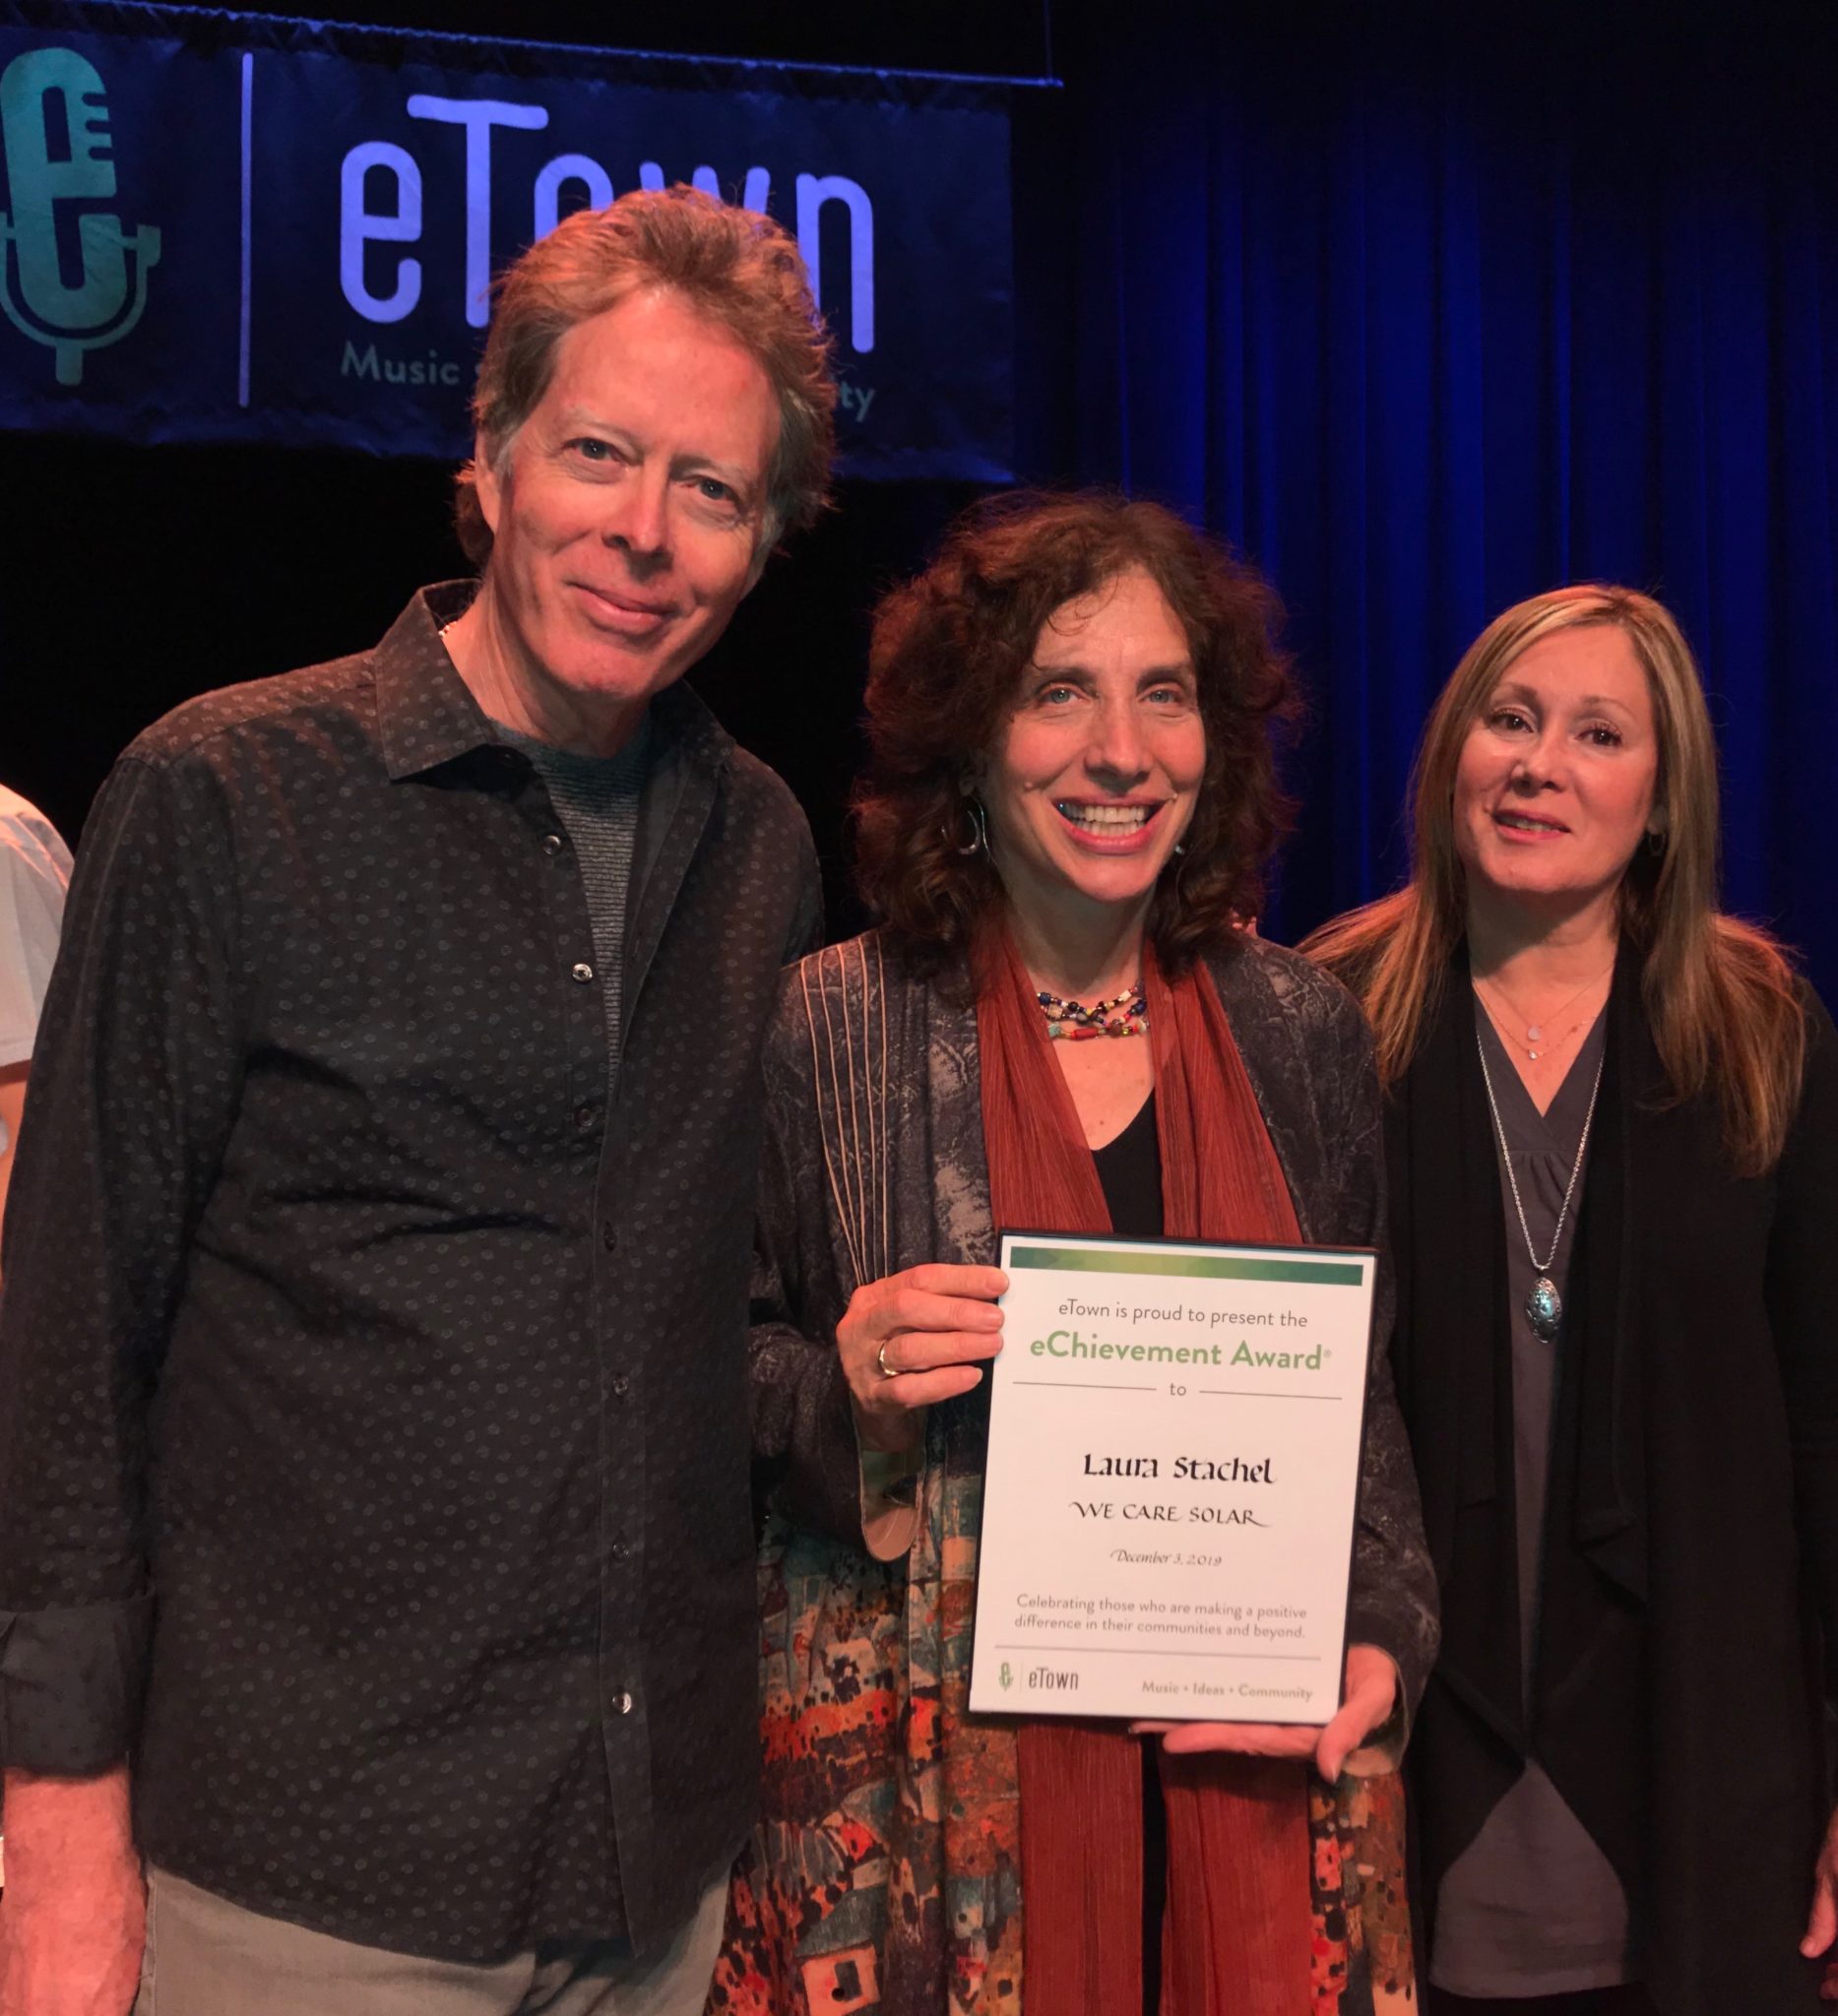 eTown eChievement Award - Laura Stachel - We Care Solar